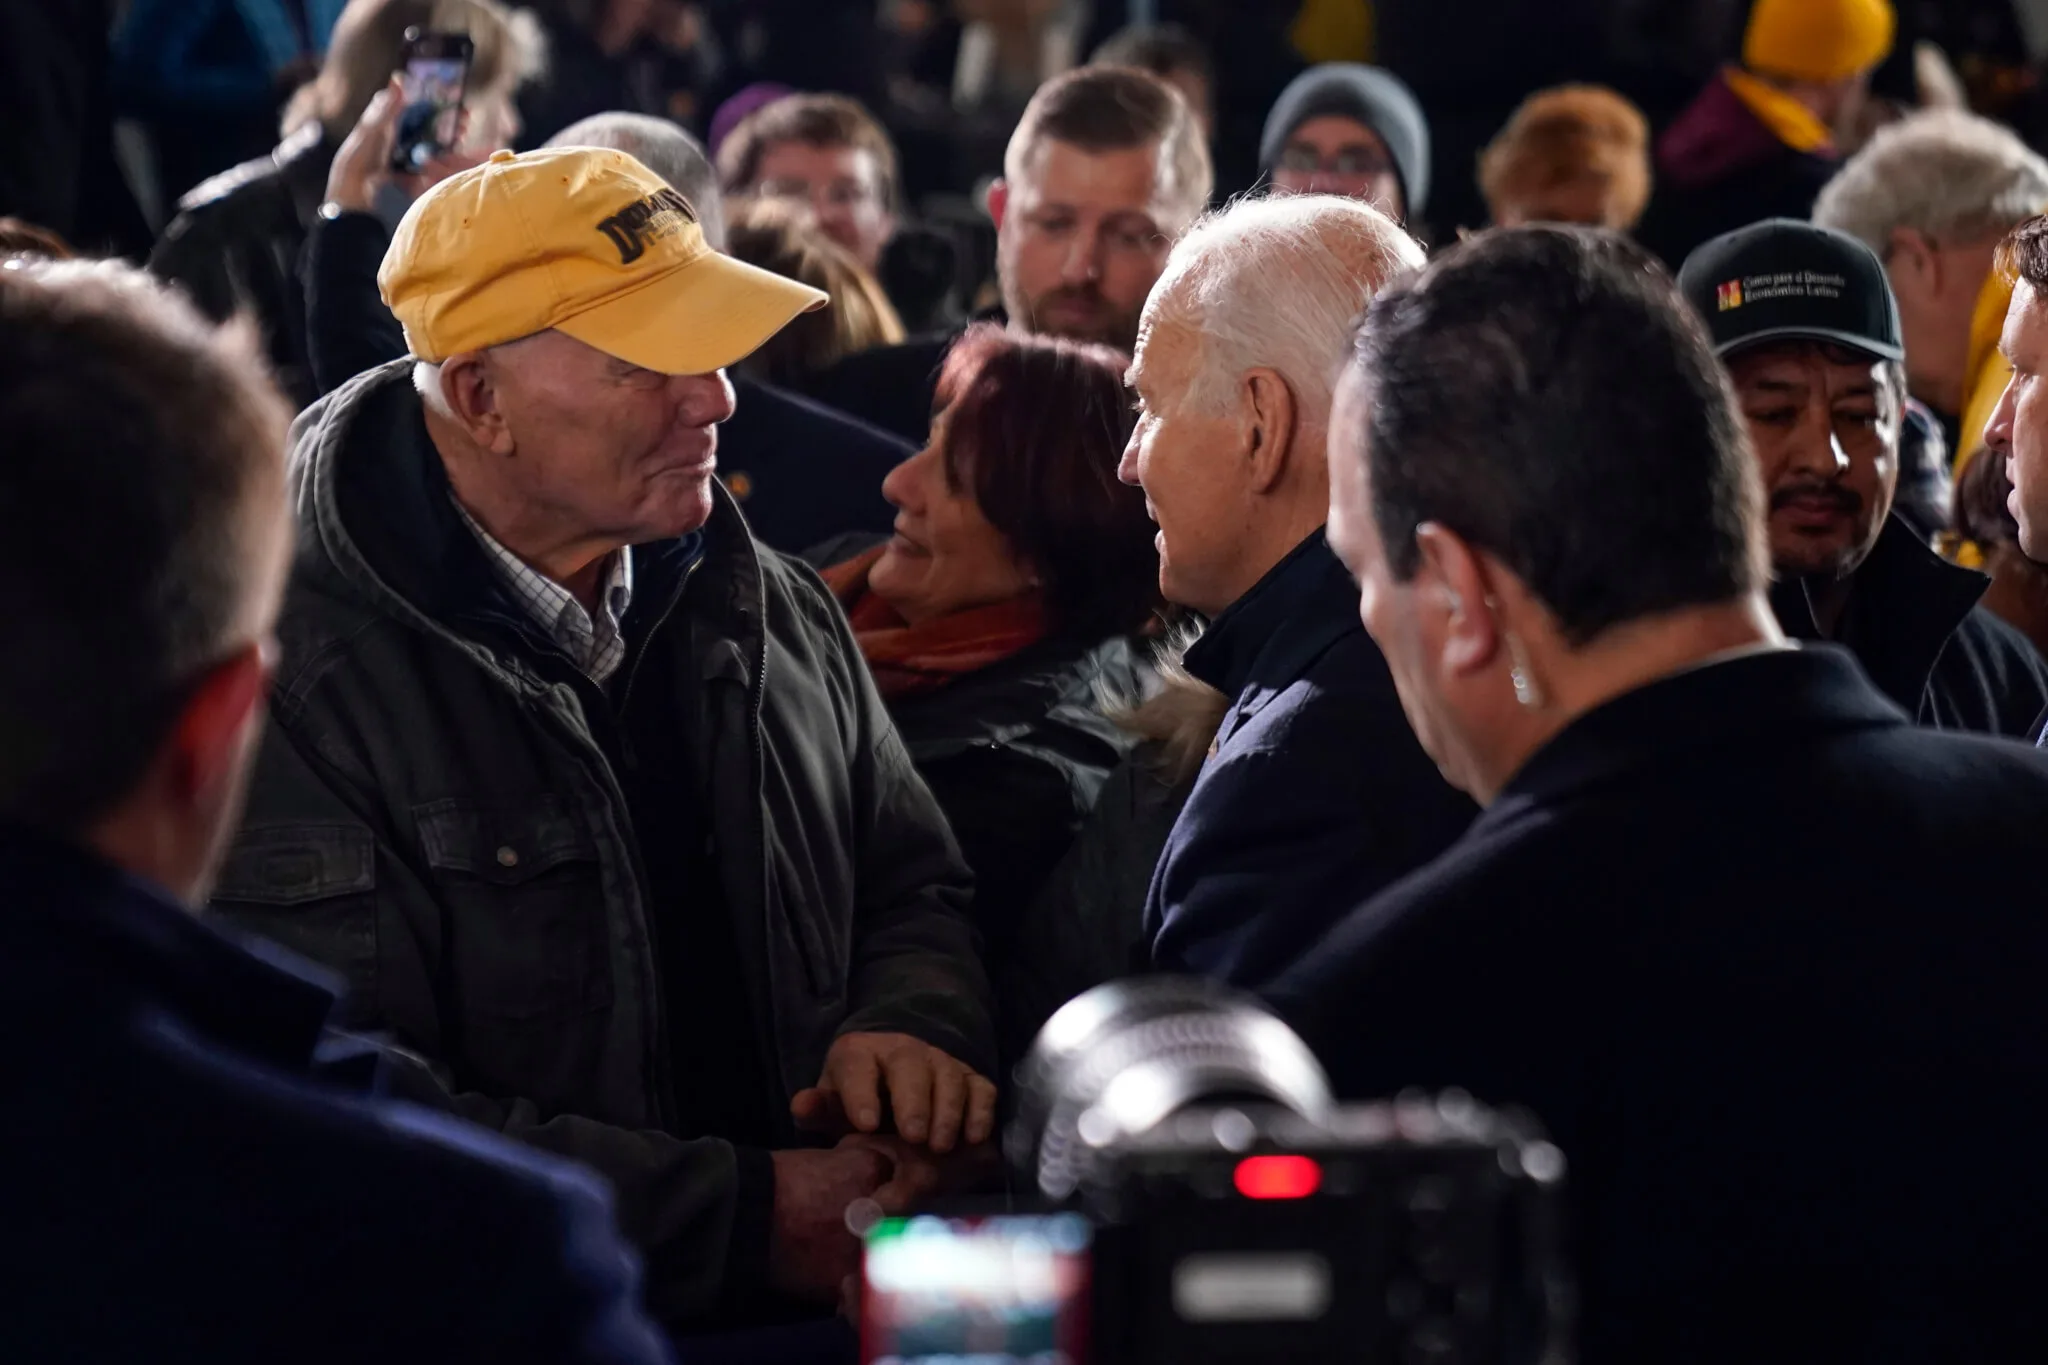 Biden invests $5 billion to support rural communities, including in Pennsylvania